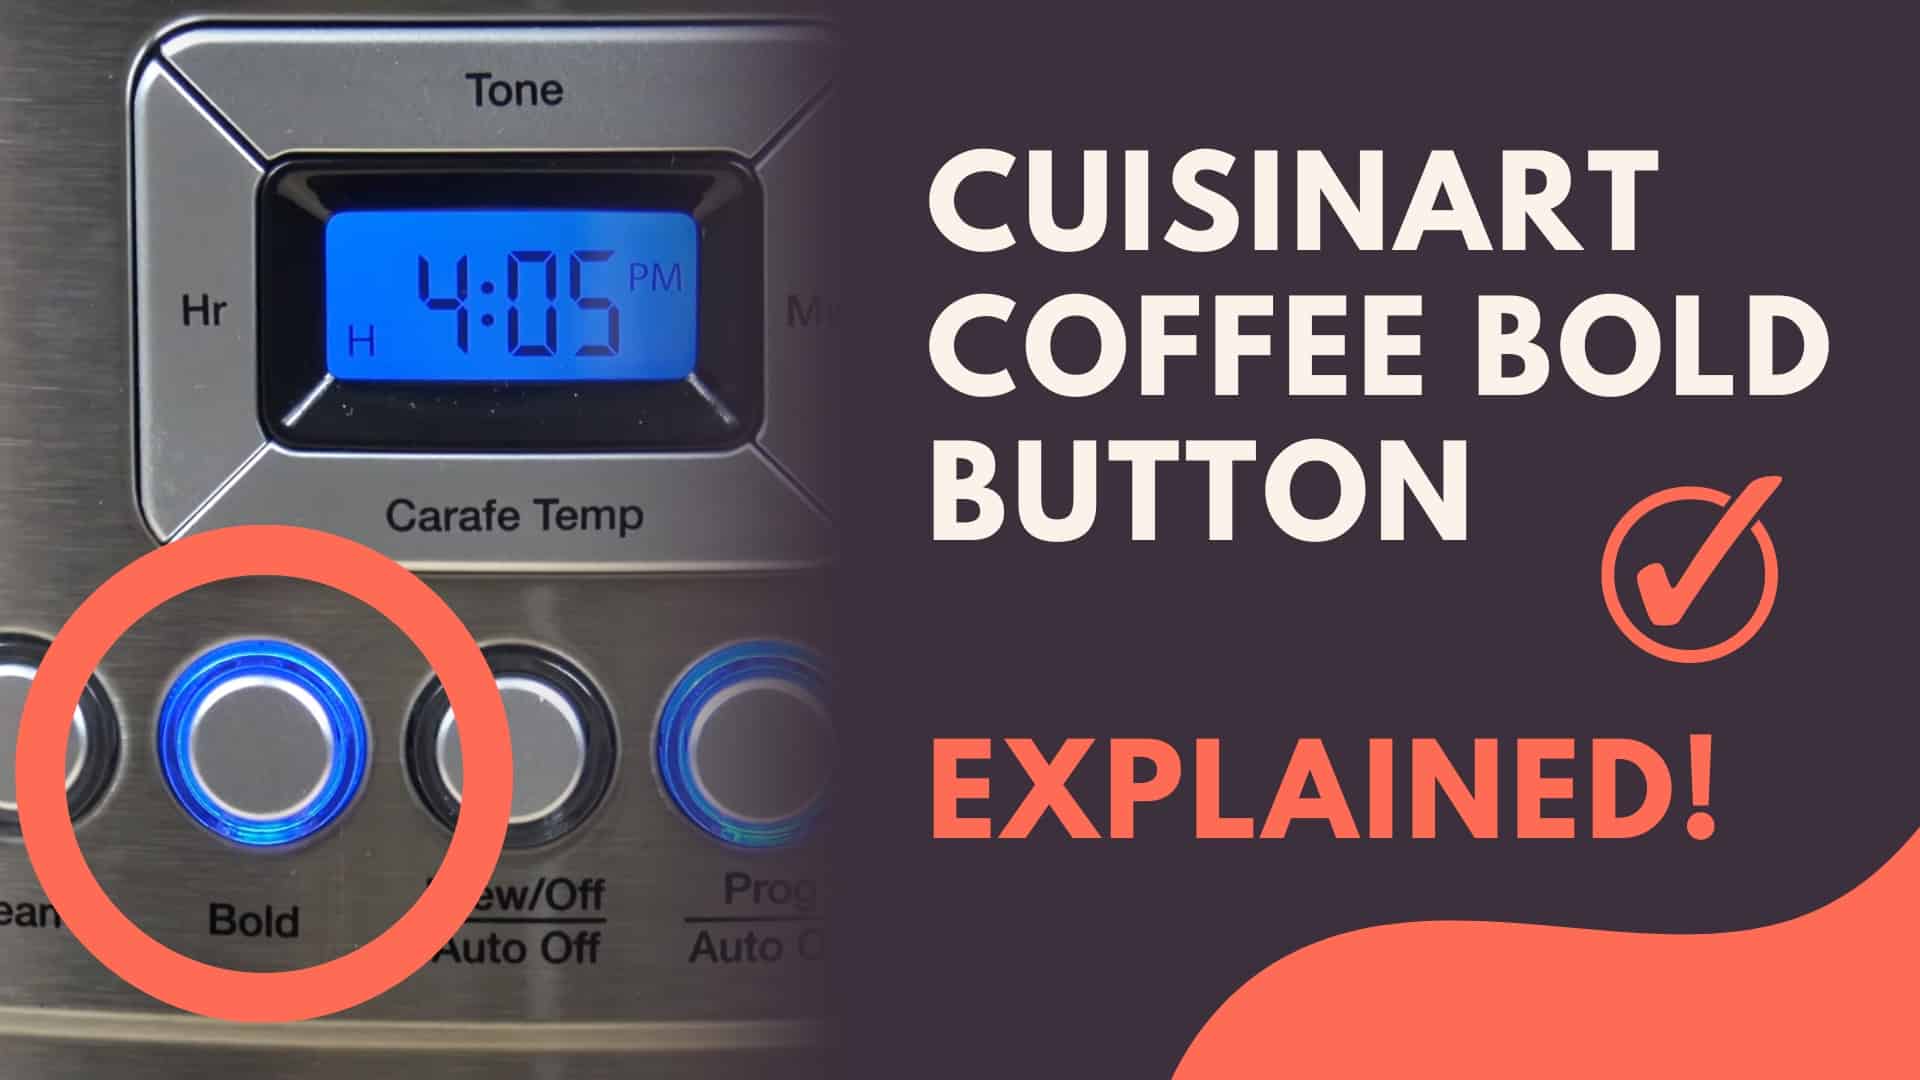 Cuisinart Coffee Bold Button